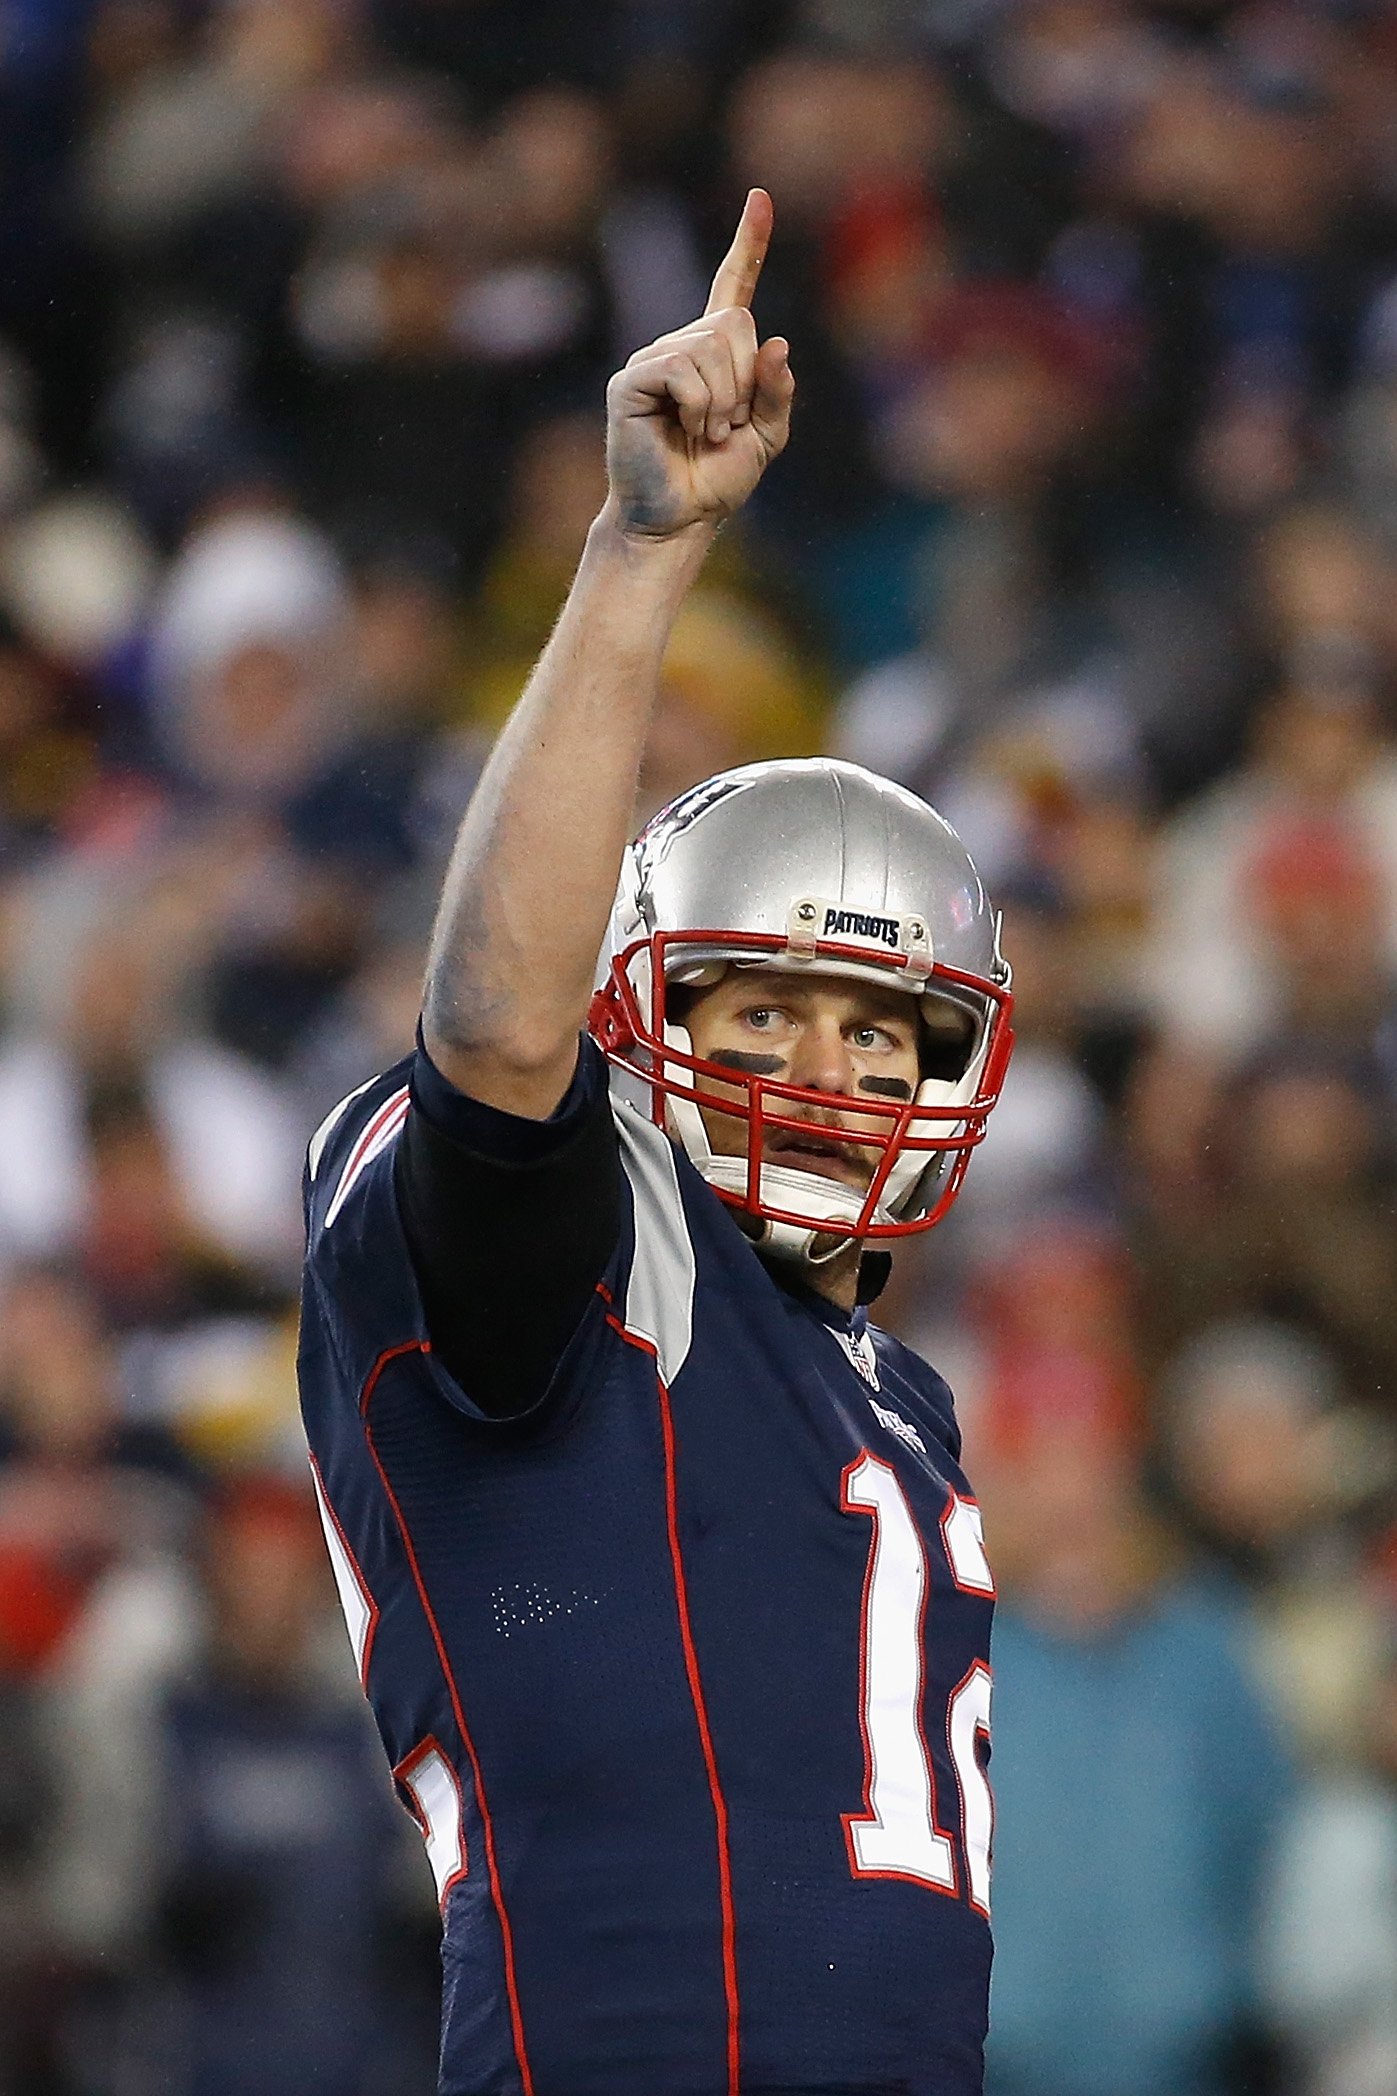 New England Patriots takımında Tom Brady #12, 22 Ocak 2017'de Foxboro, Massachusetts'te Gillette Stadyumu'nda.  |  Kaynak: Getty Images